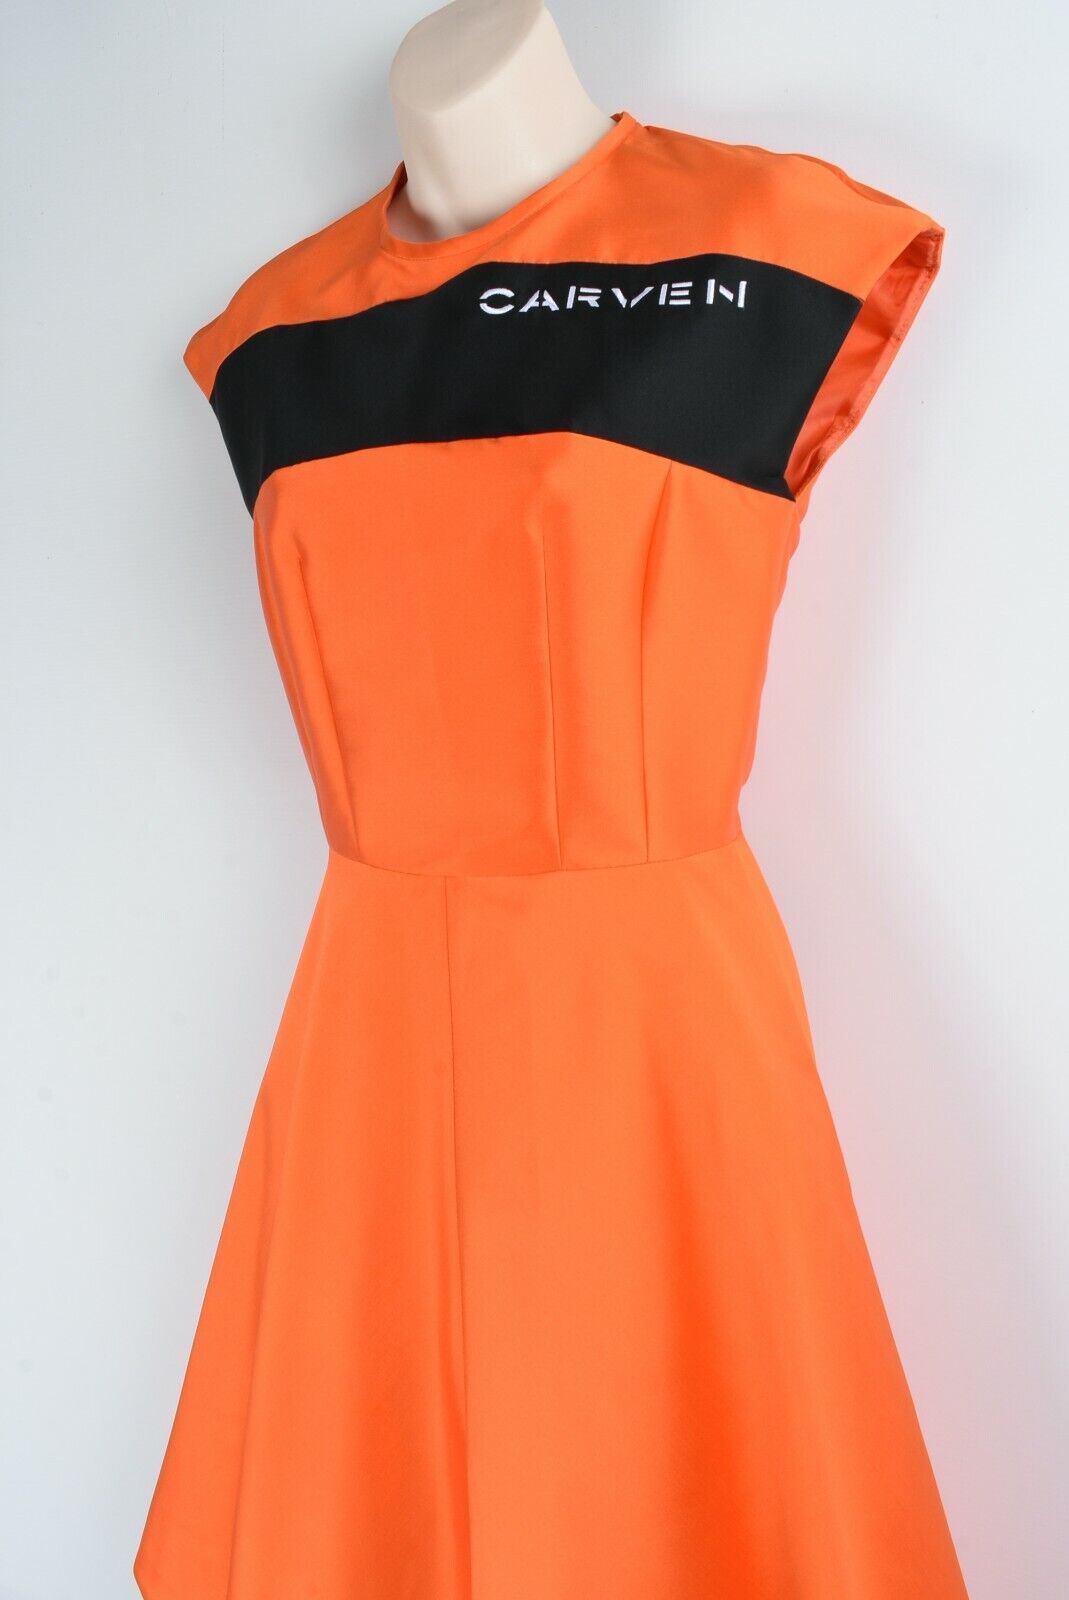 CARVEN Women's Orange/Black Skater Dress, size UK 6